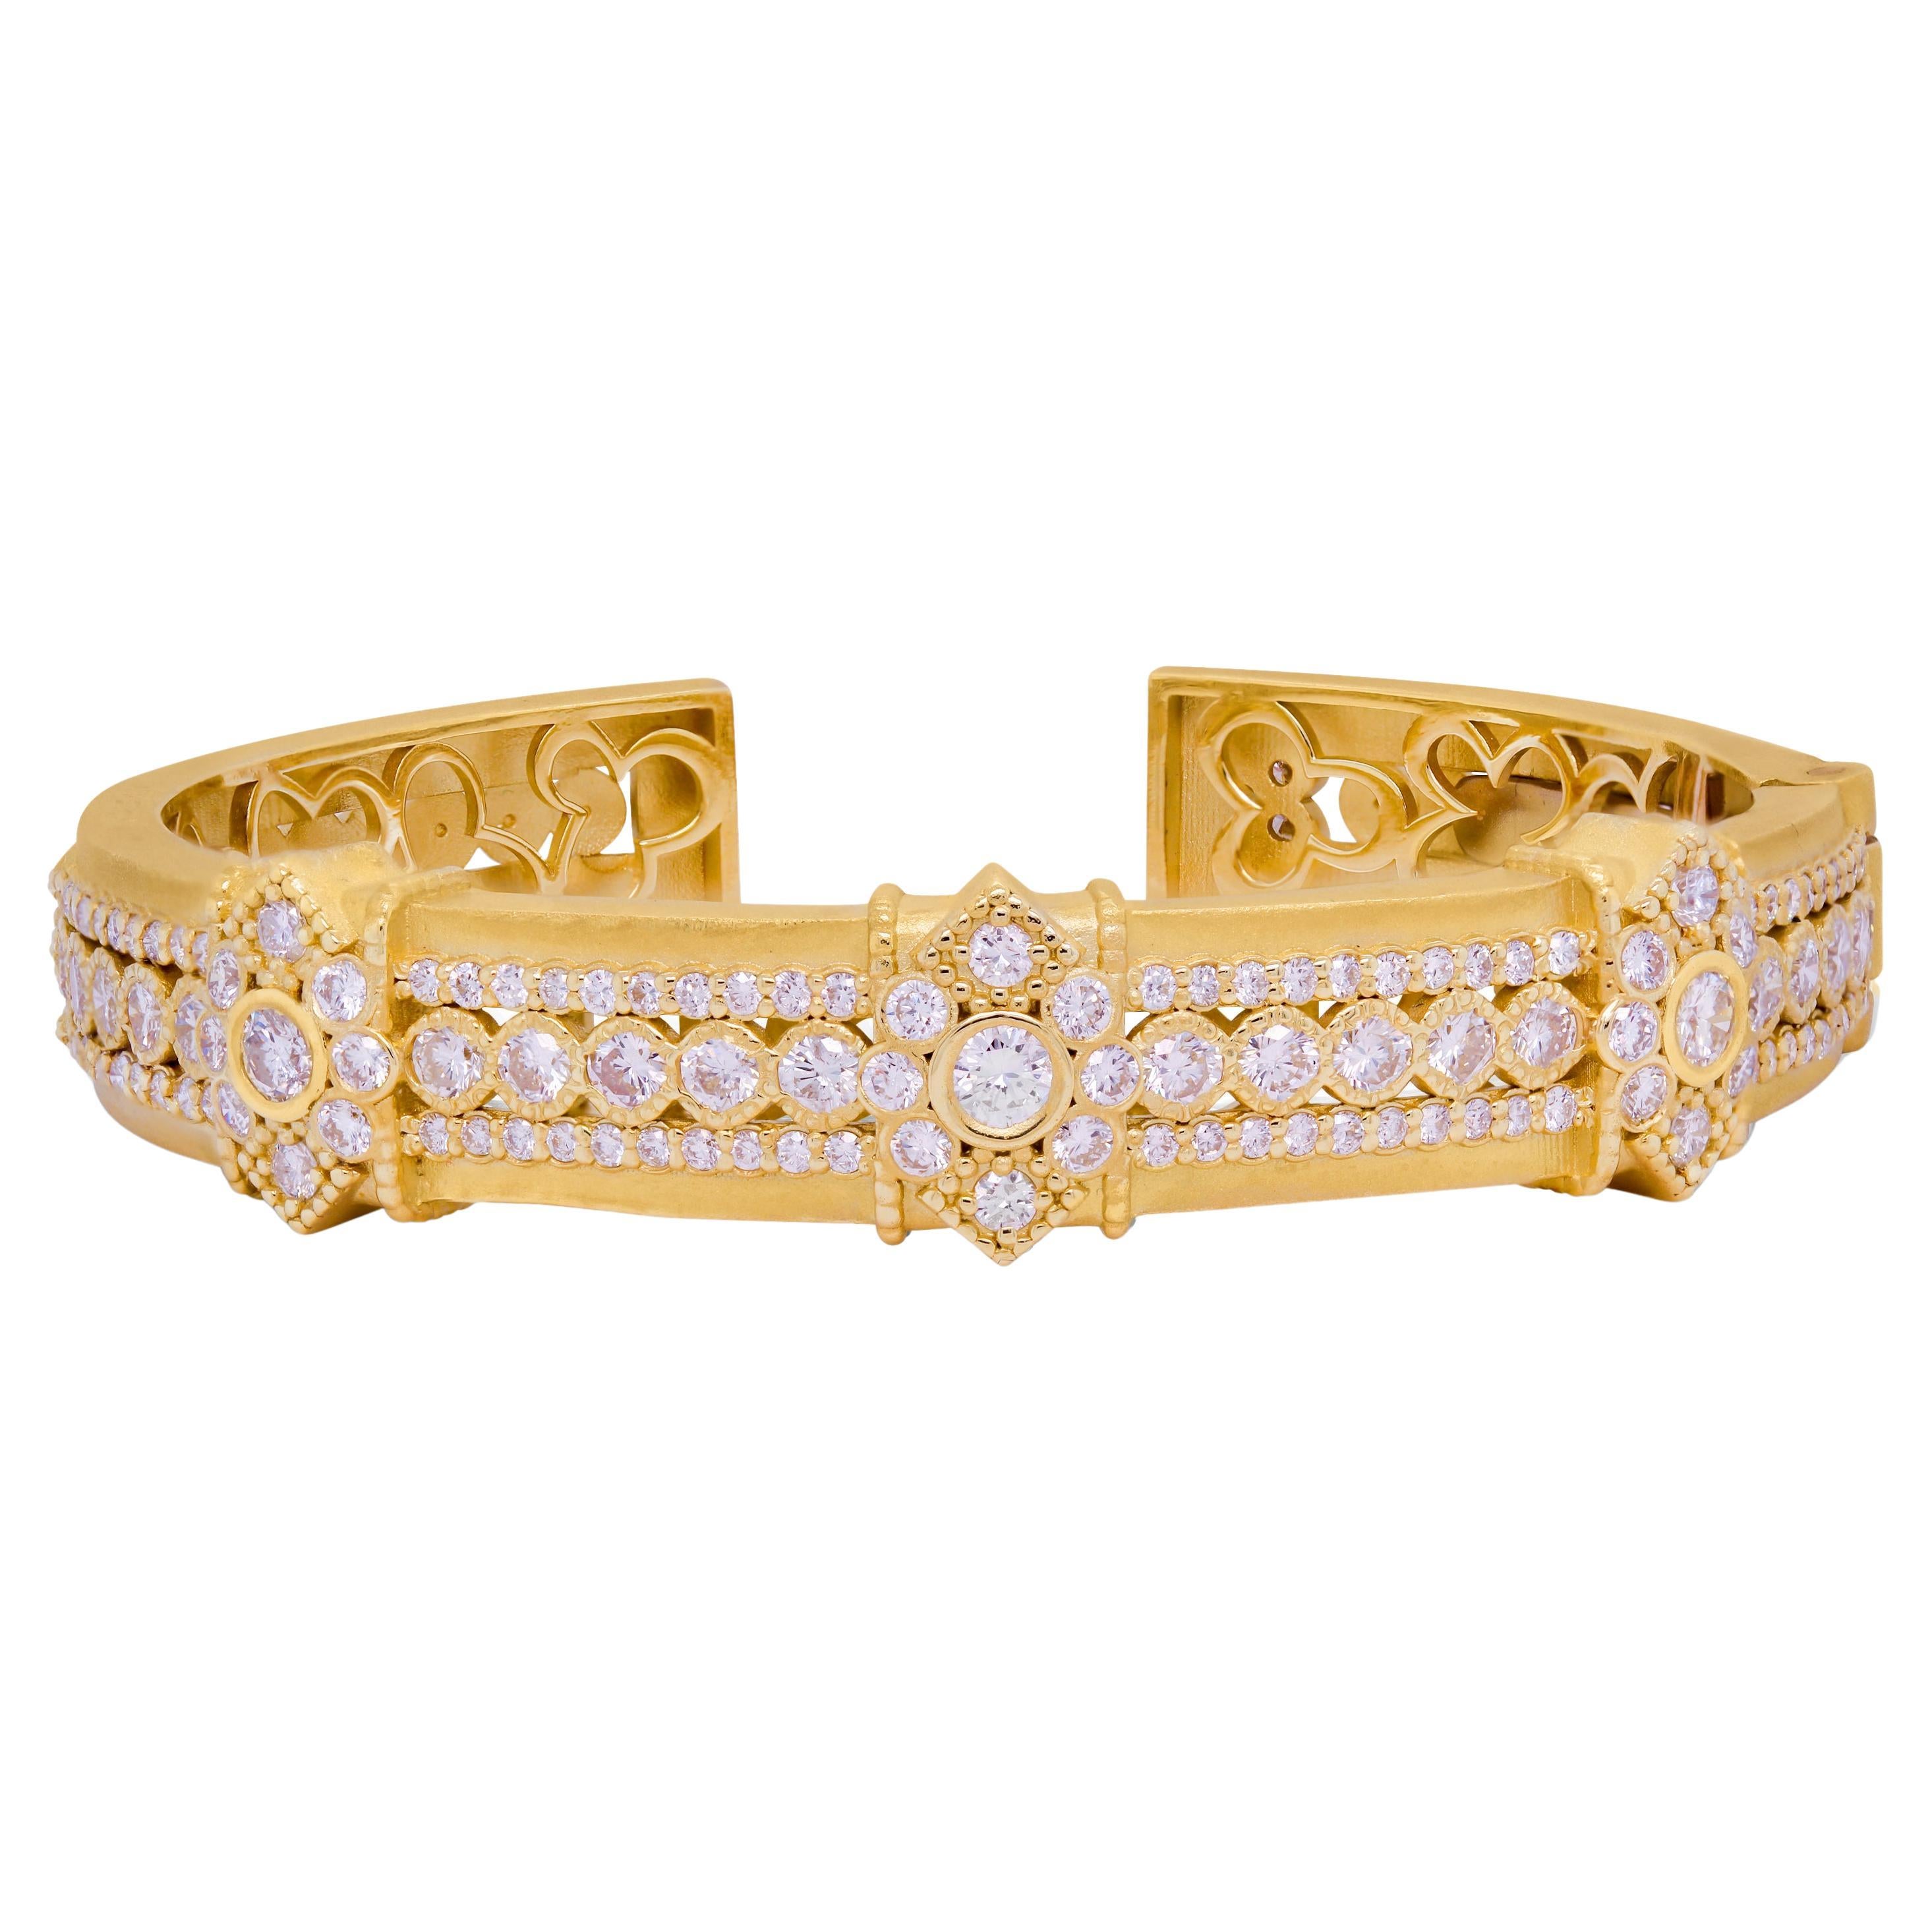 Stambolian 18K Yellow Gold and Diamond Bangle Bracelet